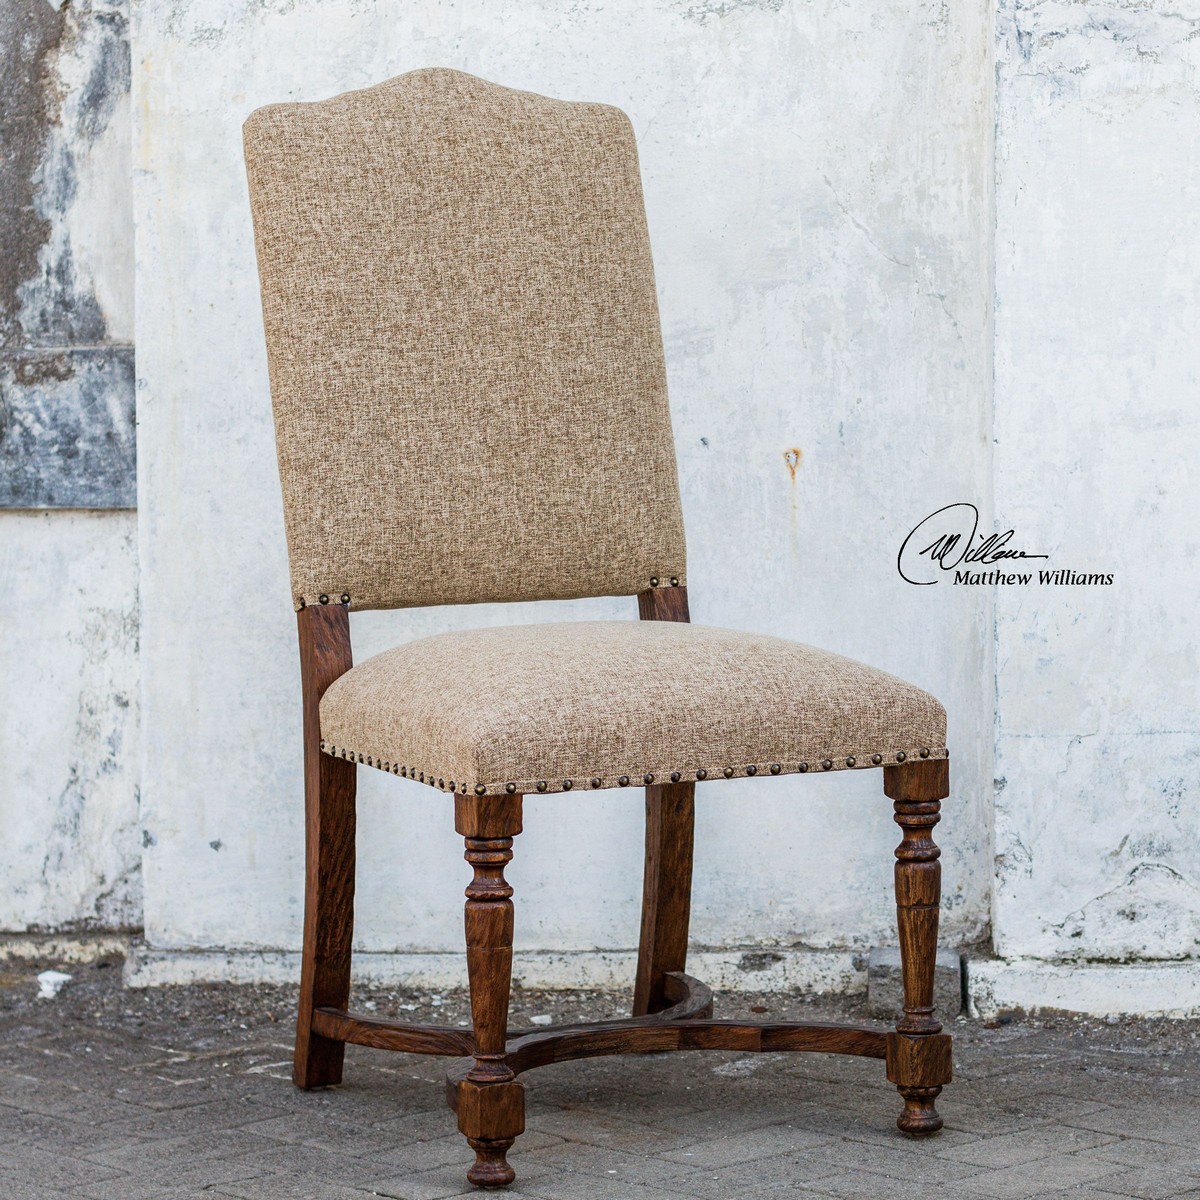 Uttermost Pierson Textured Linen Accent Chair